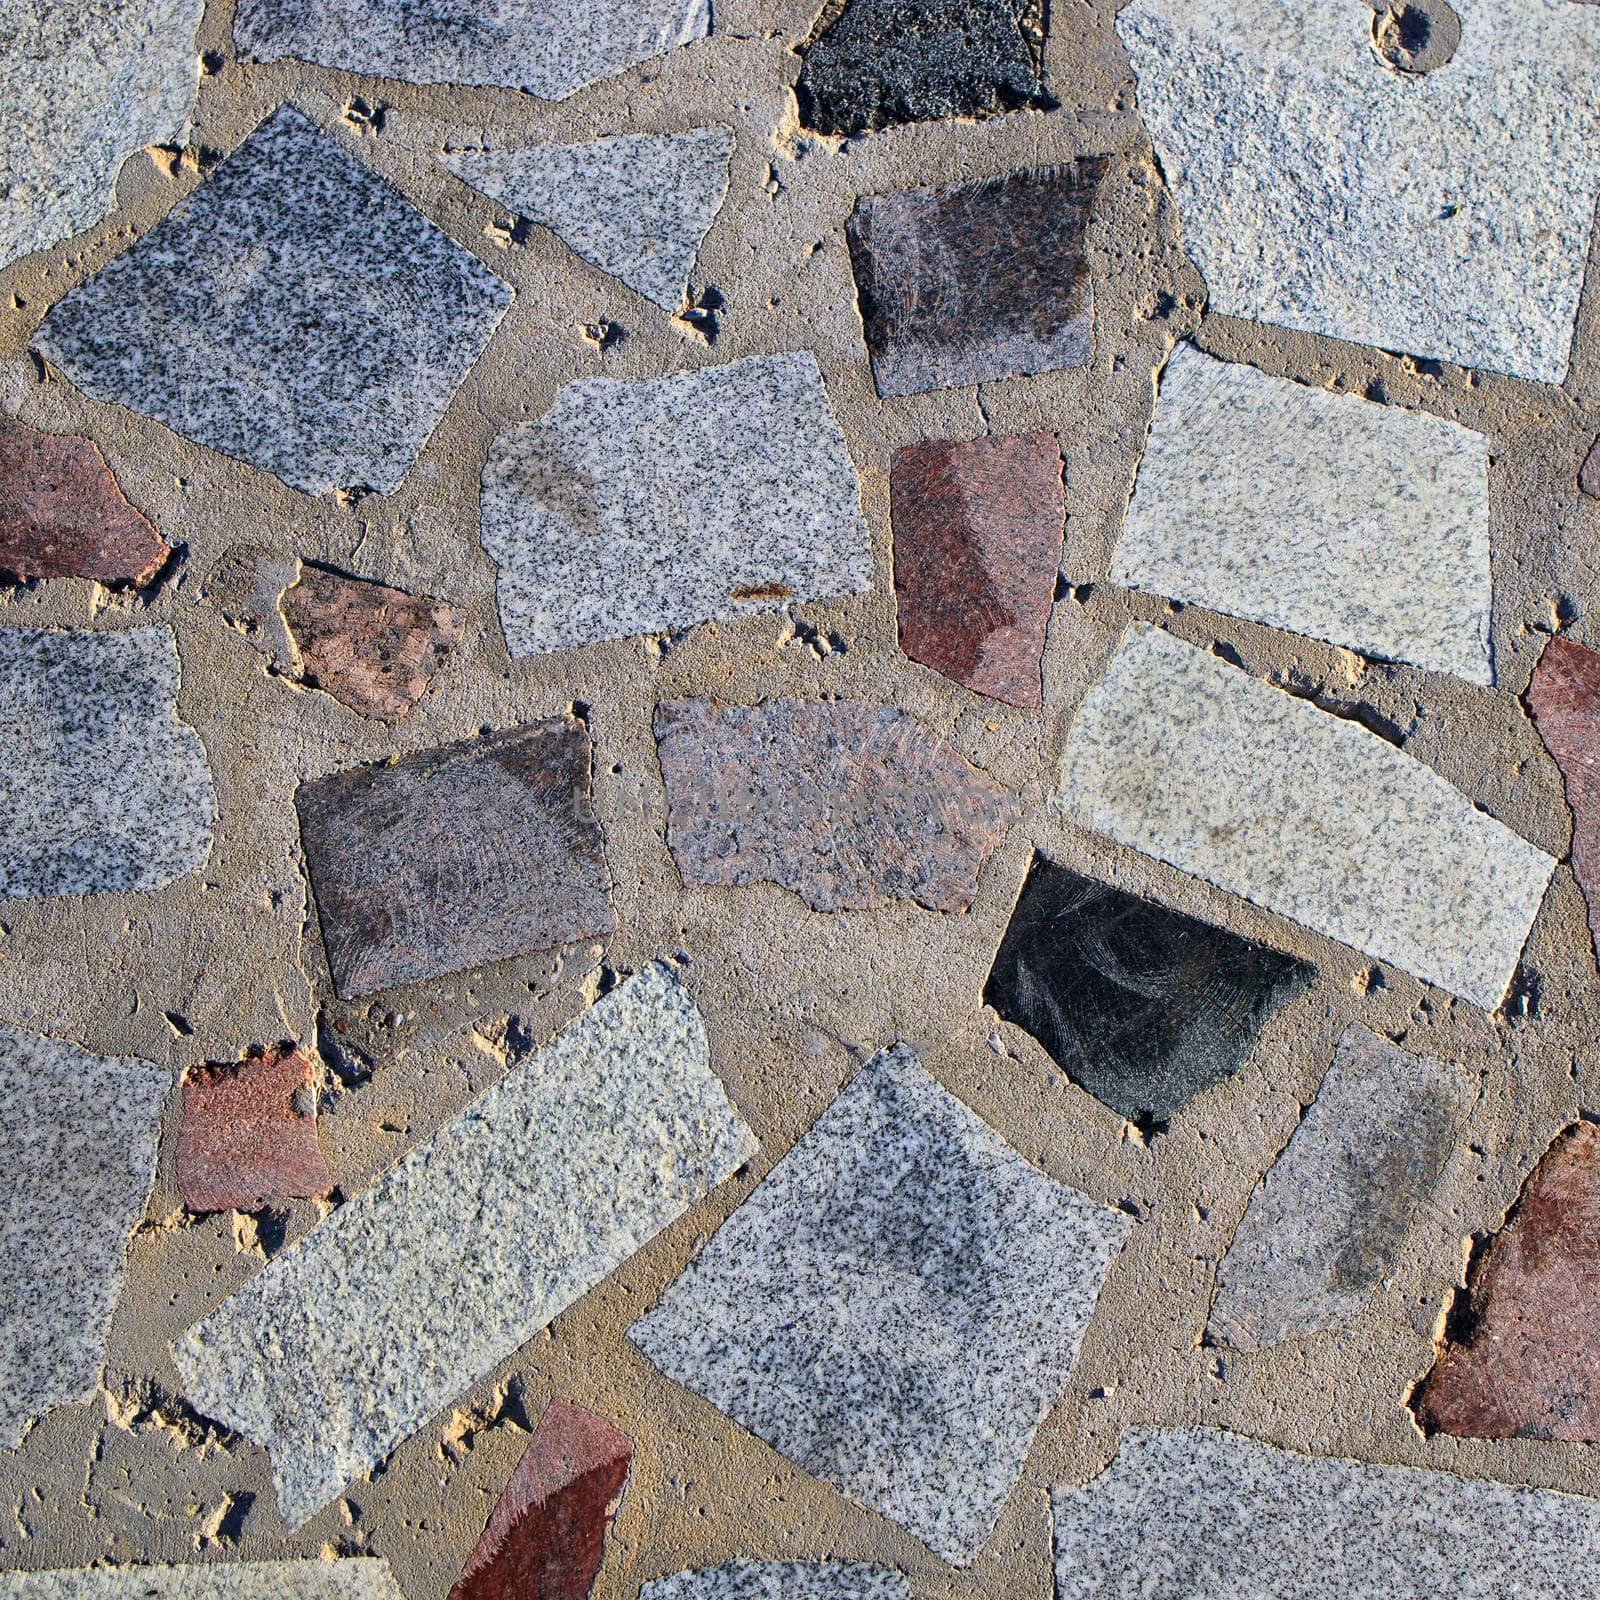 sample of paving stones with decorative unevenly laid stones by elenarostunova